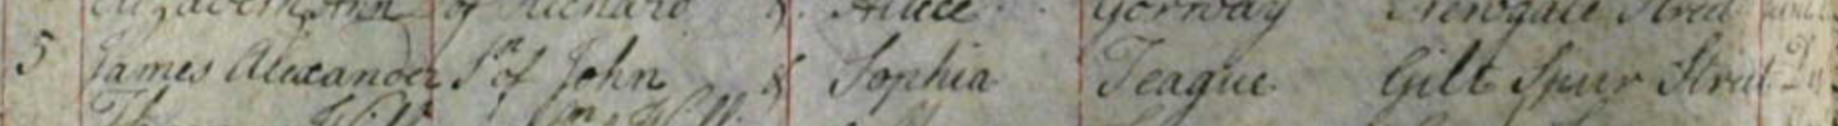 James Alexander Teague Baptism at St Sepulcher, 5 January 1812